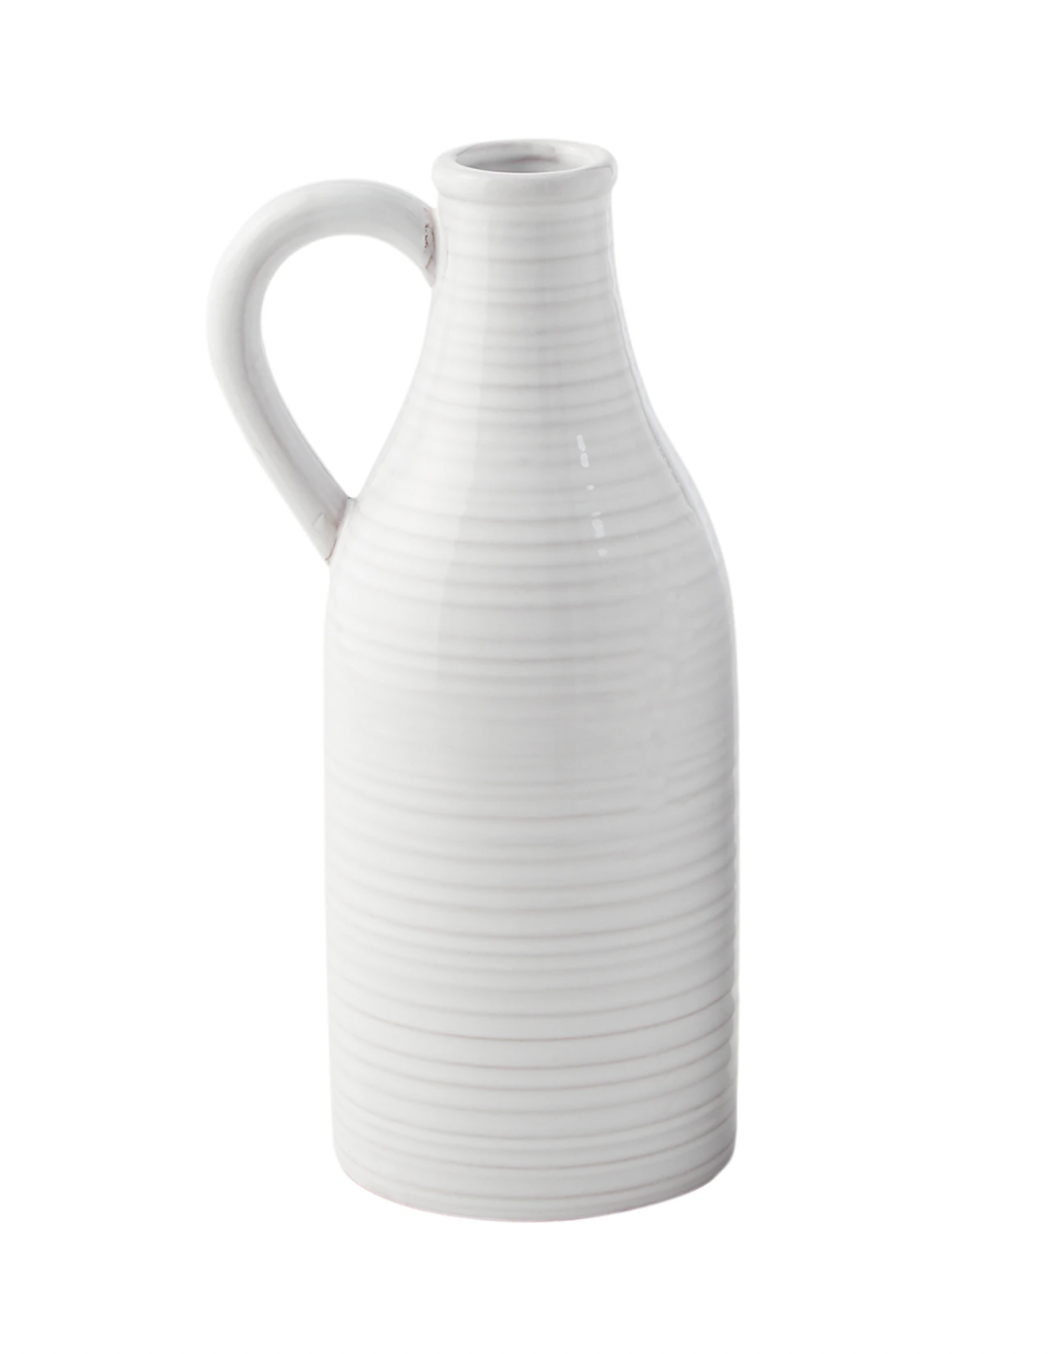 Small Milk Jug Vase